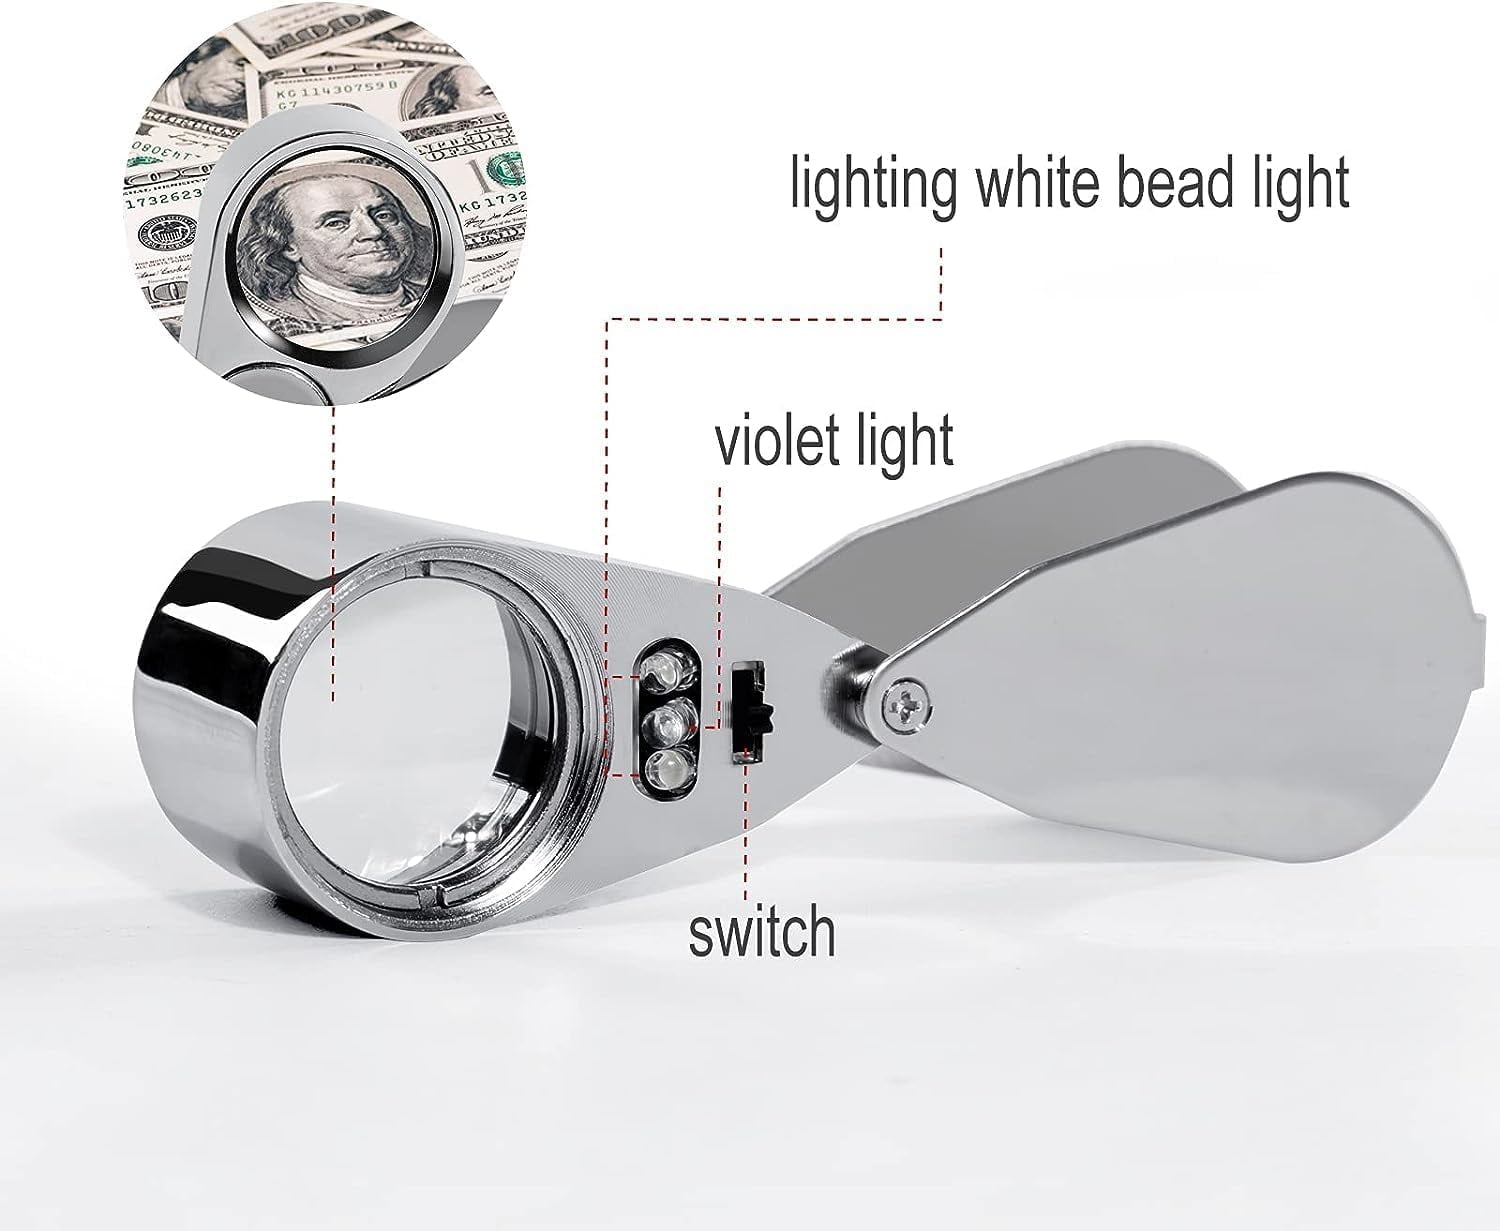 40x Jewelers Loupe Folding Jewelry Eye Magnifier with Illuminated LED Light  (LED Currency Detection / Jewelers Identifying Lupe Type)